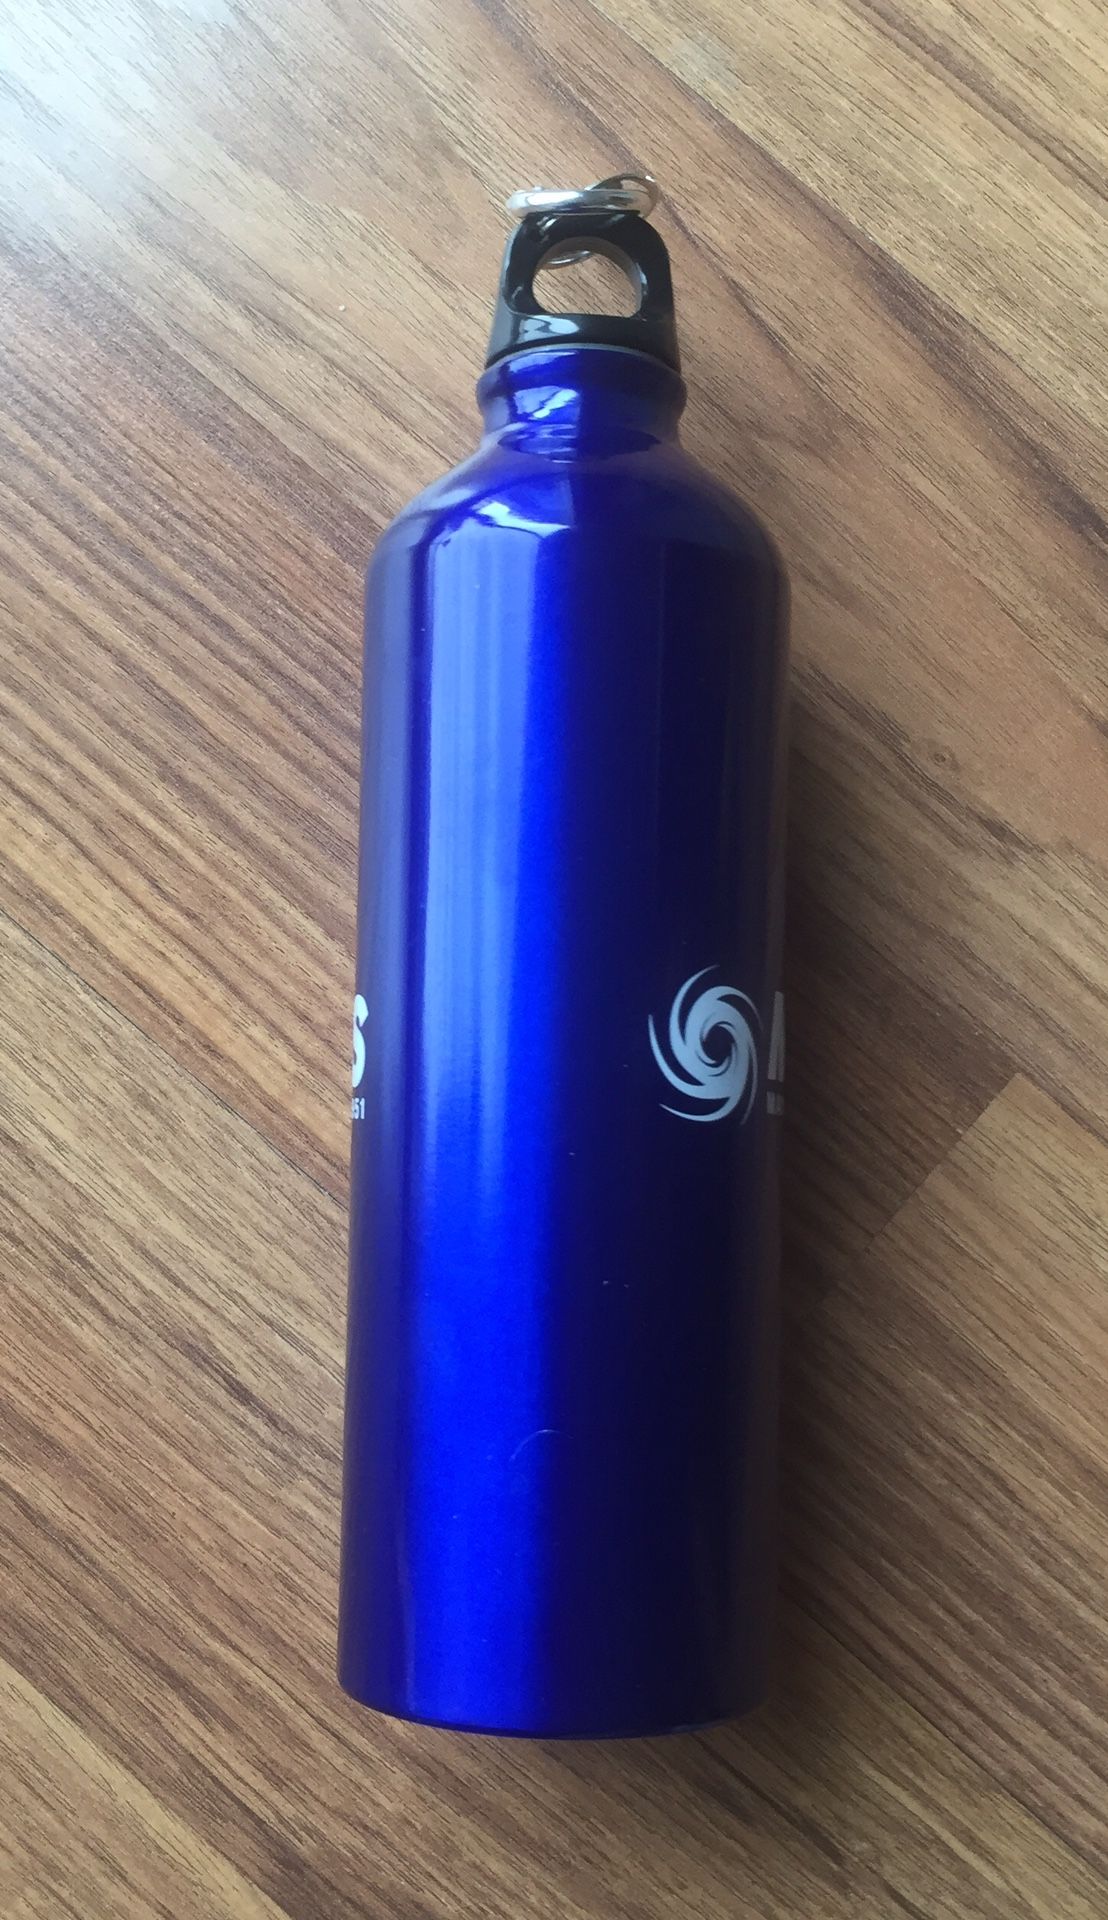 Aluminum water bottle with keychain holder